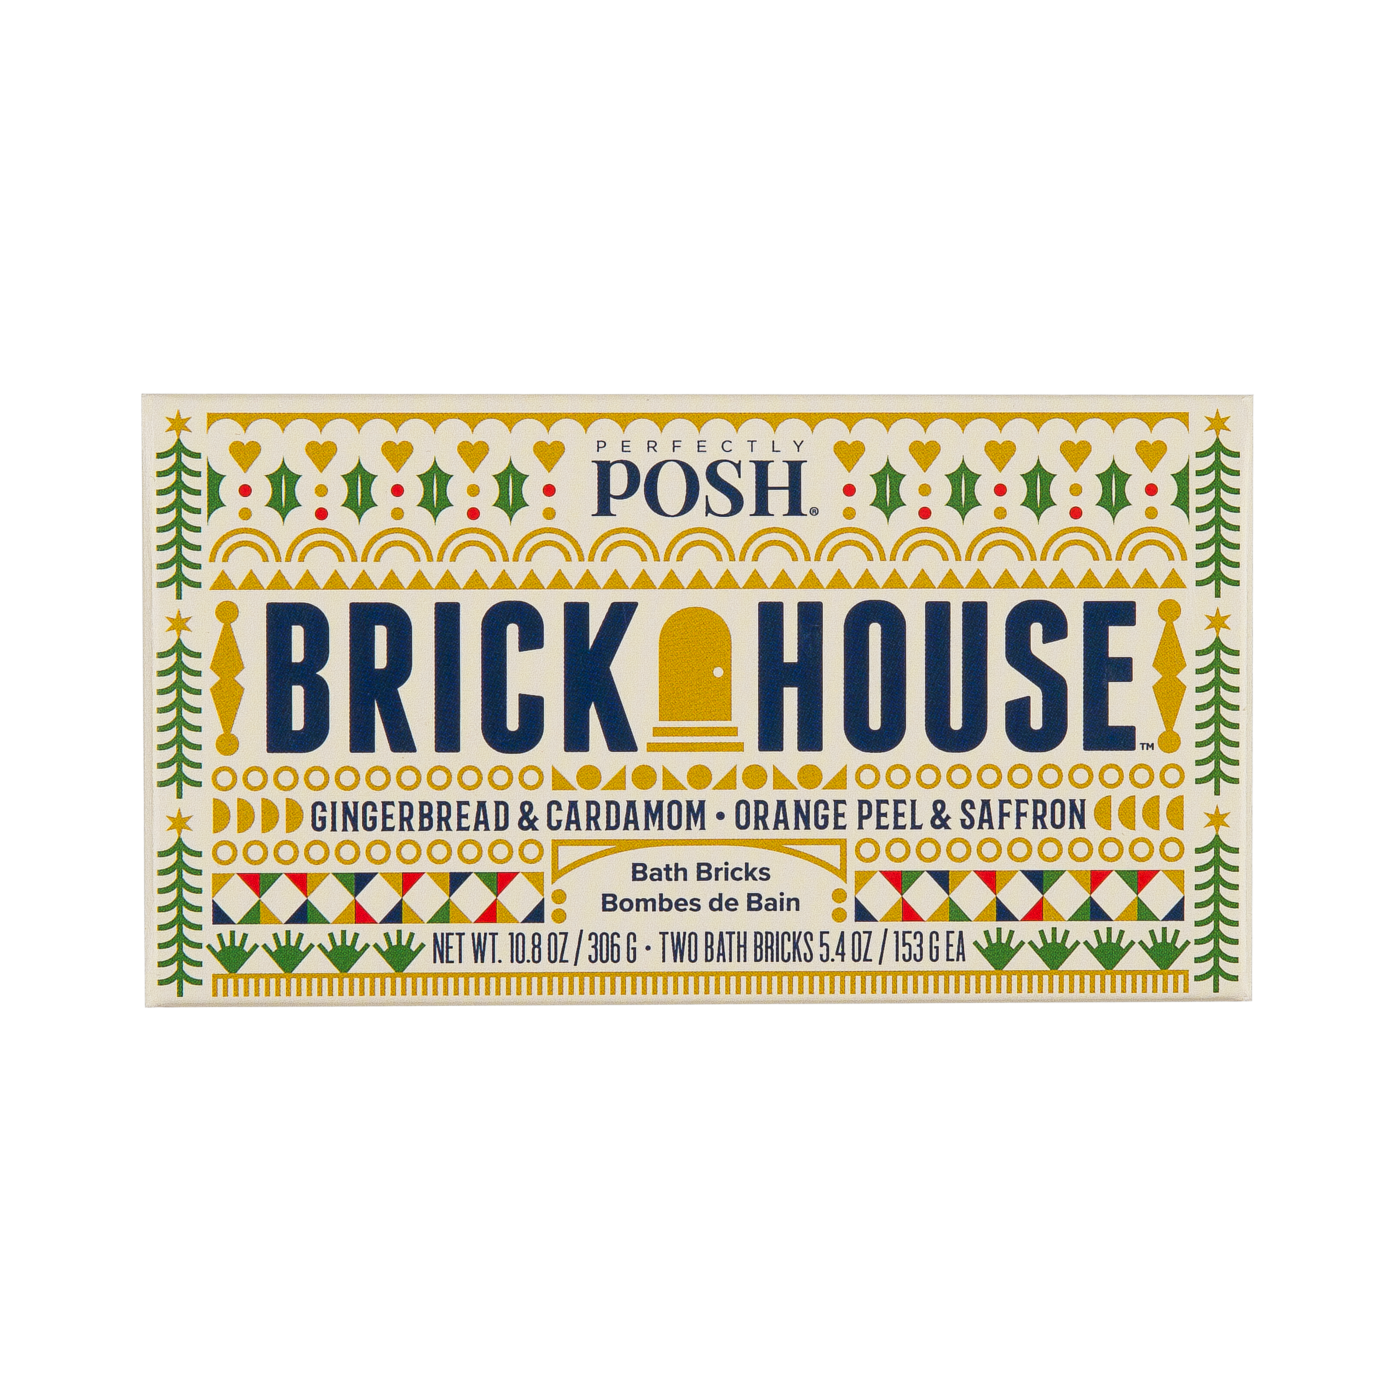 Perfectly Posh *Brick House* Bath Bricks